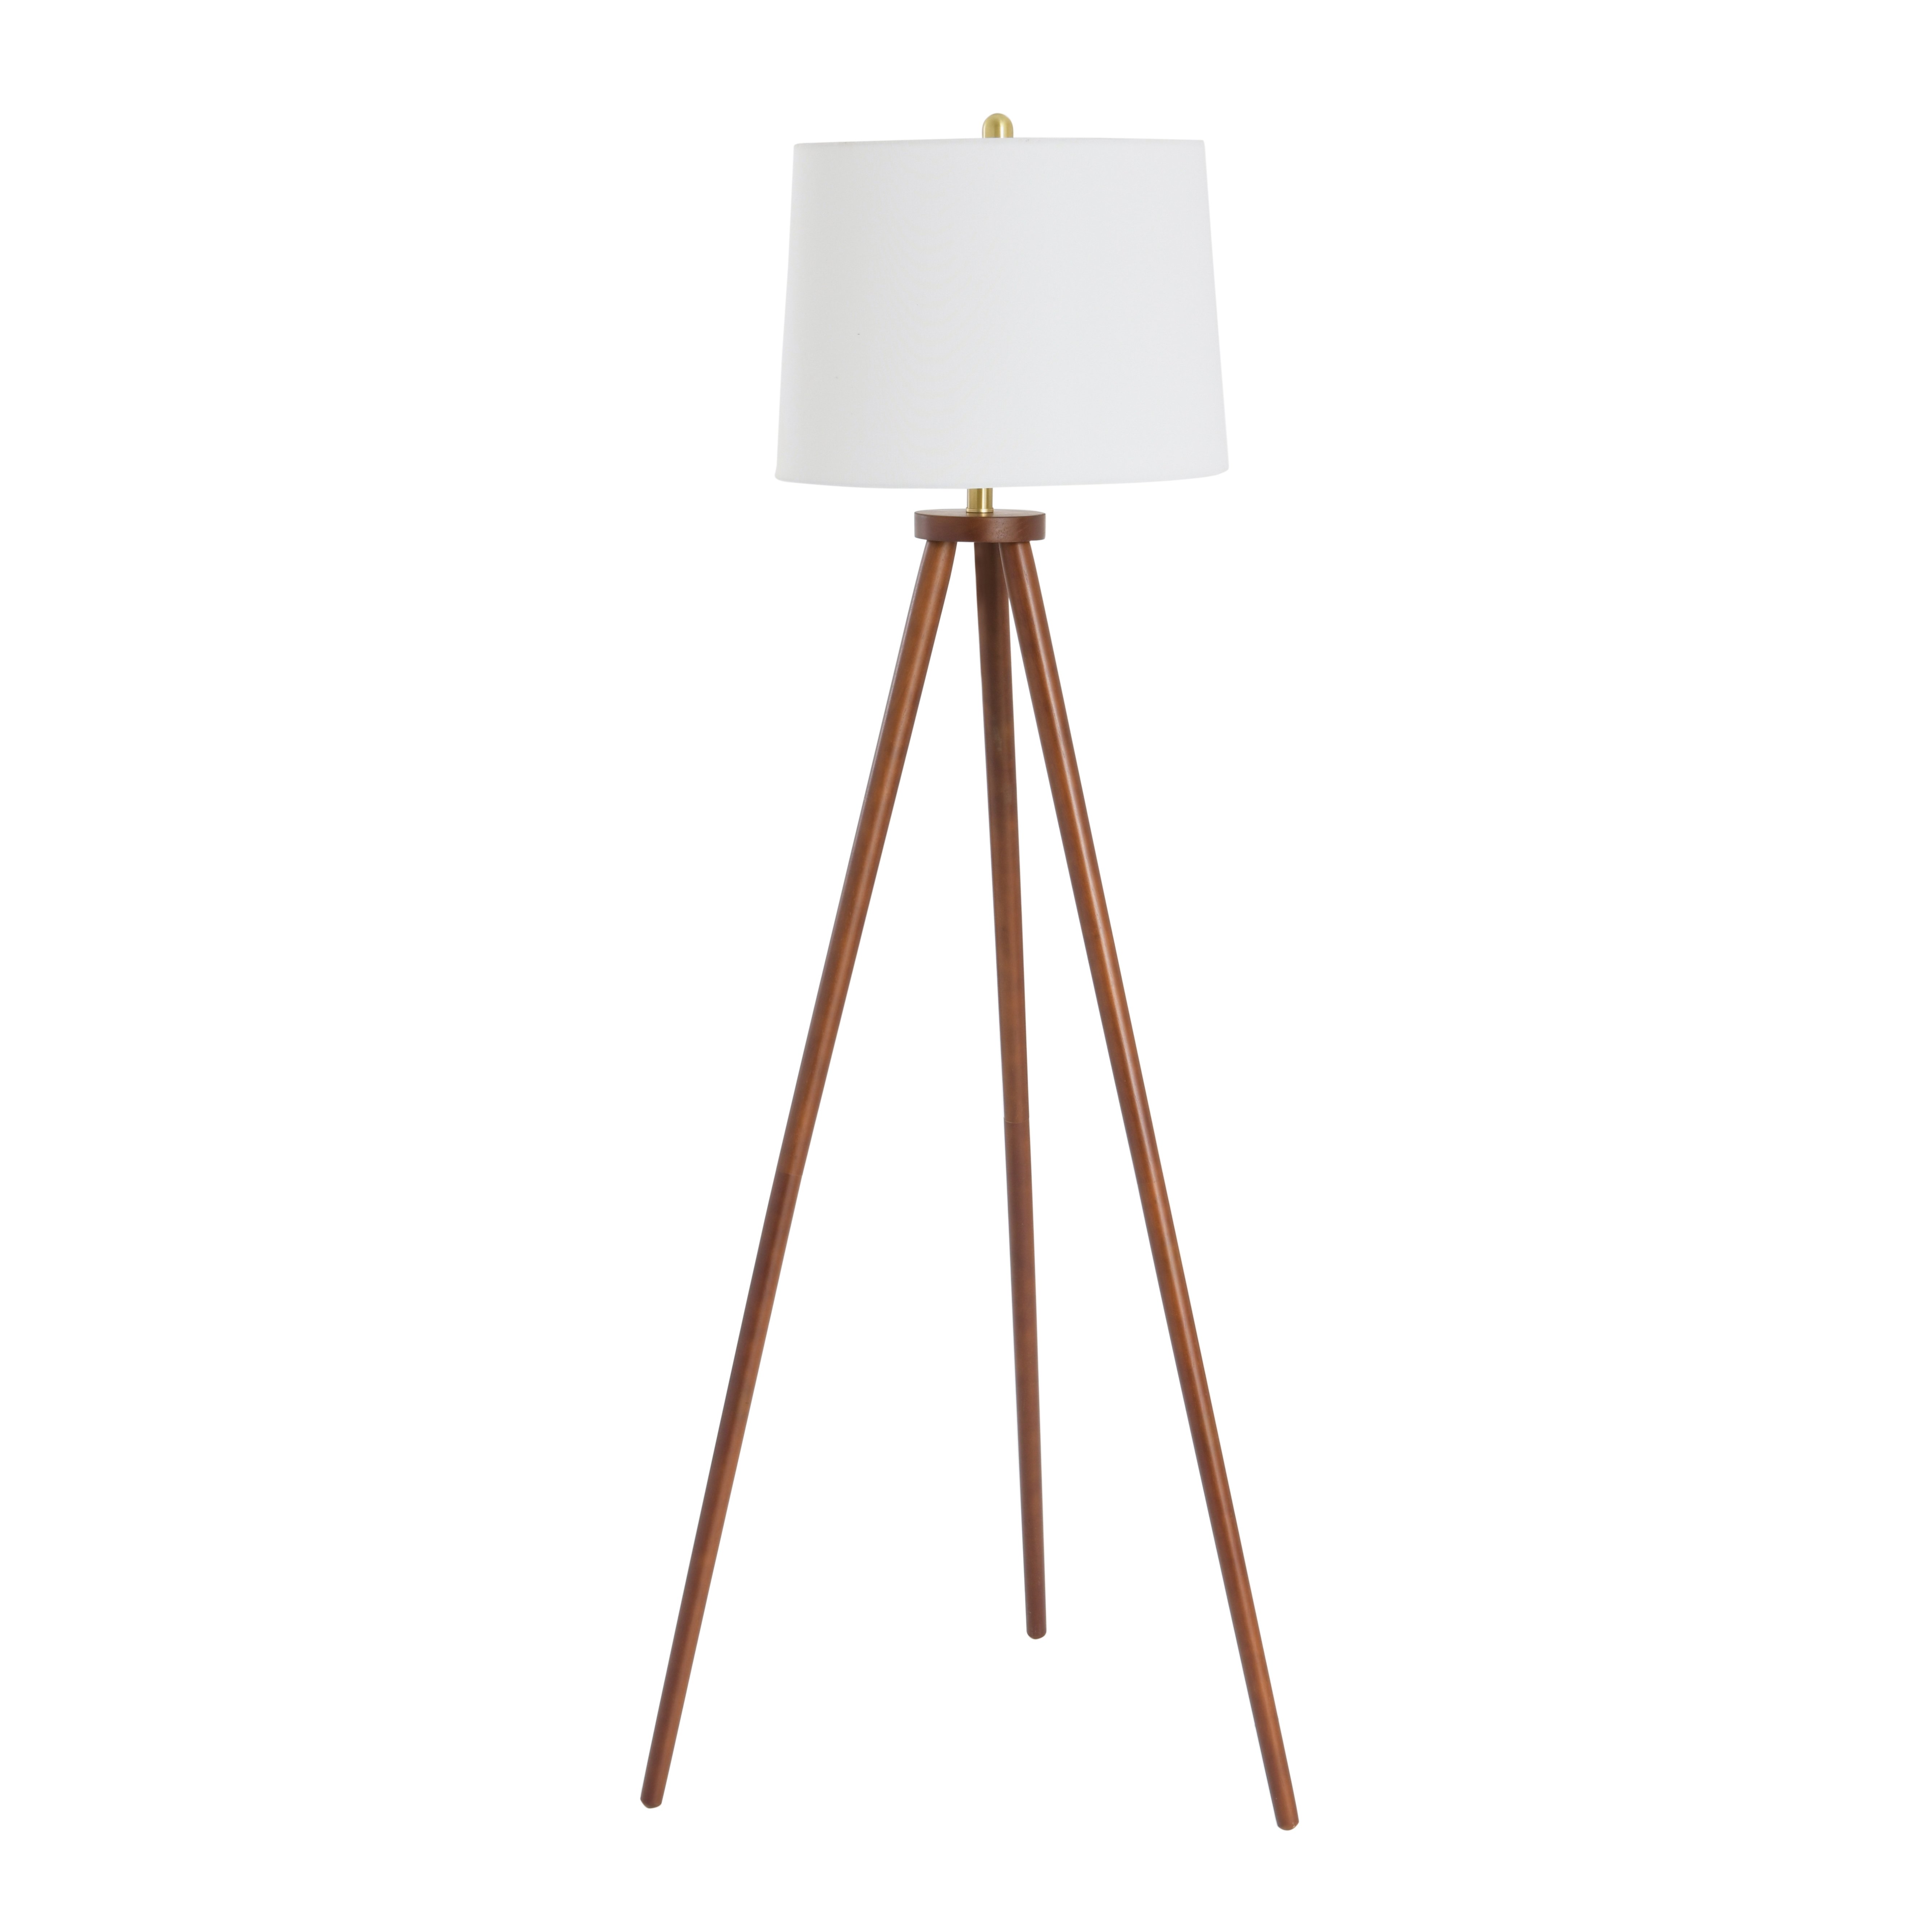 A-Frame Tripod Rubber Wood Floor Lamp, Cream Linen Shade, Espresso - Image 0